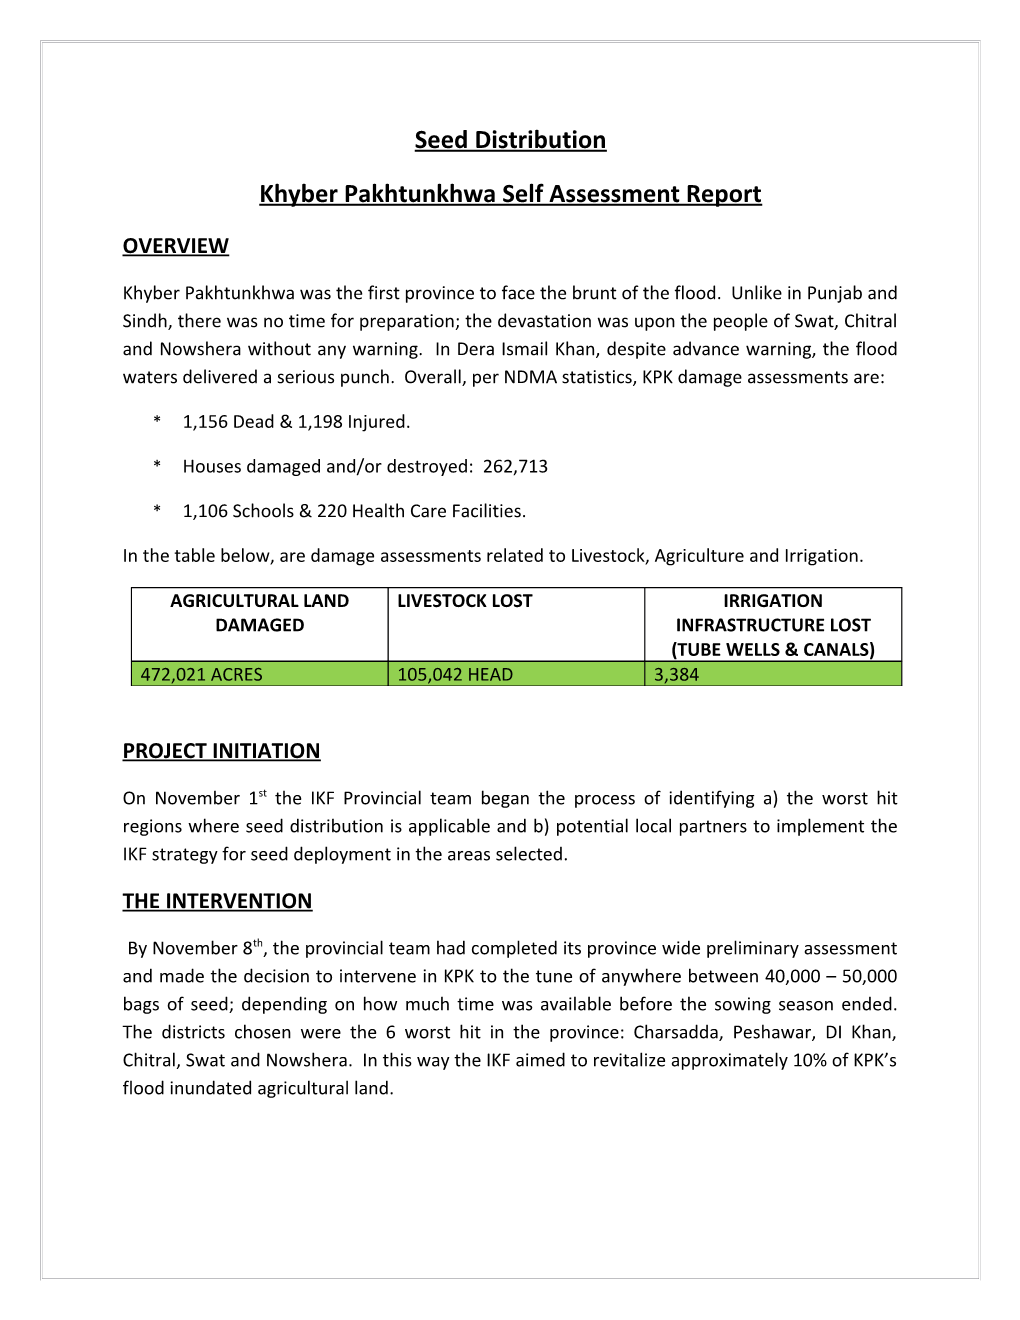 Khyber Pakhtunkhwaself Assessment Report